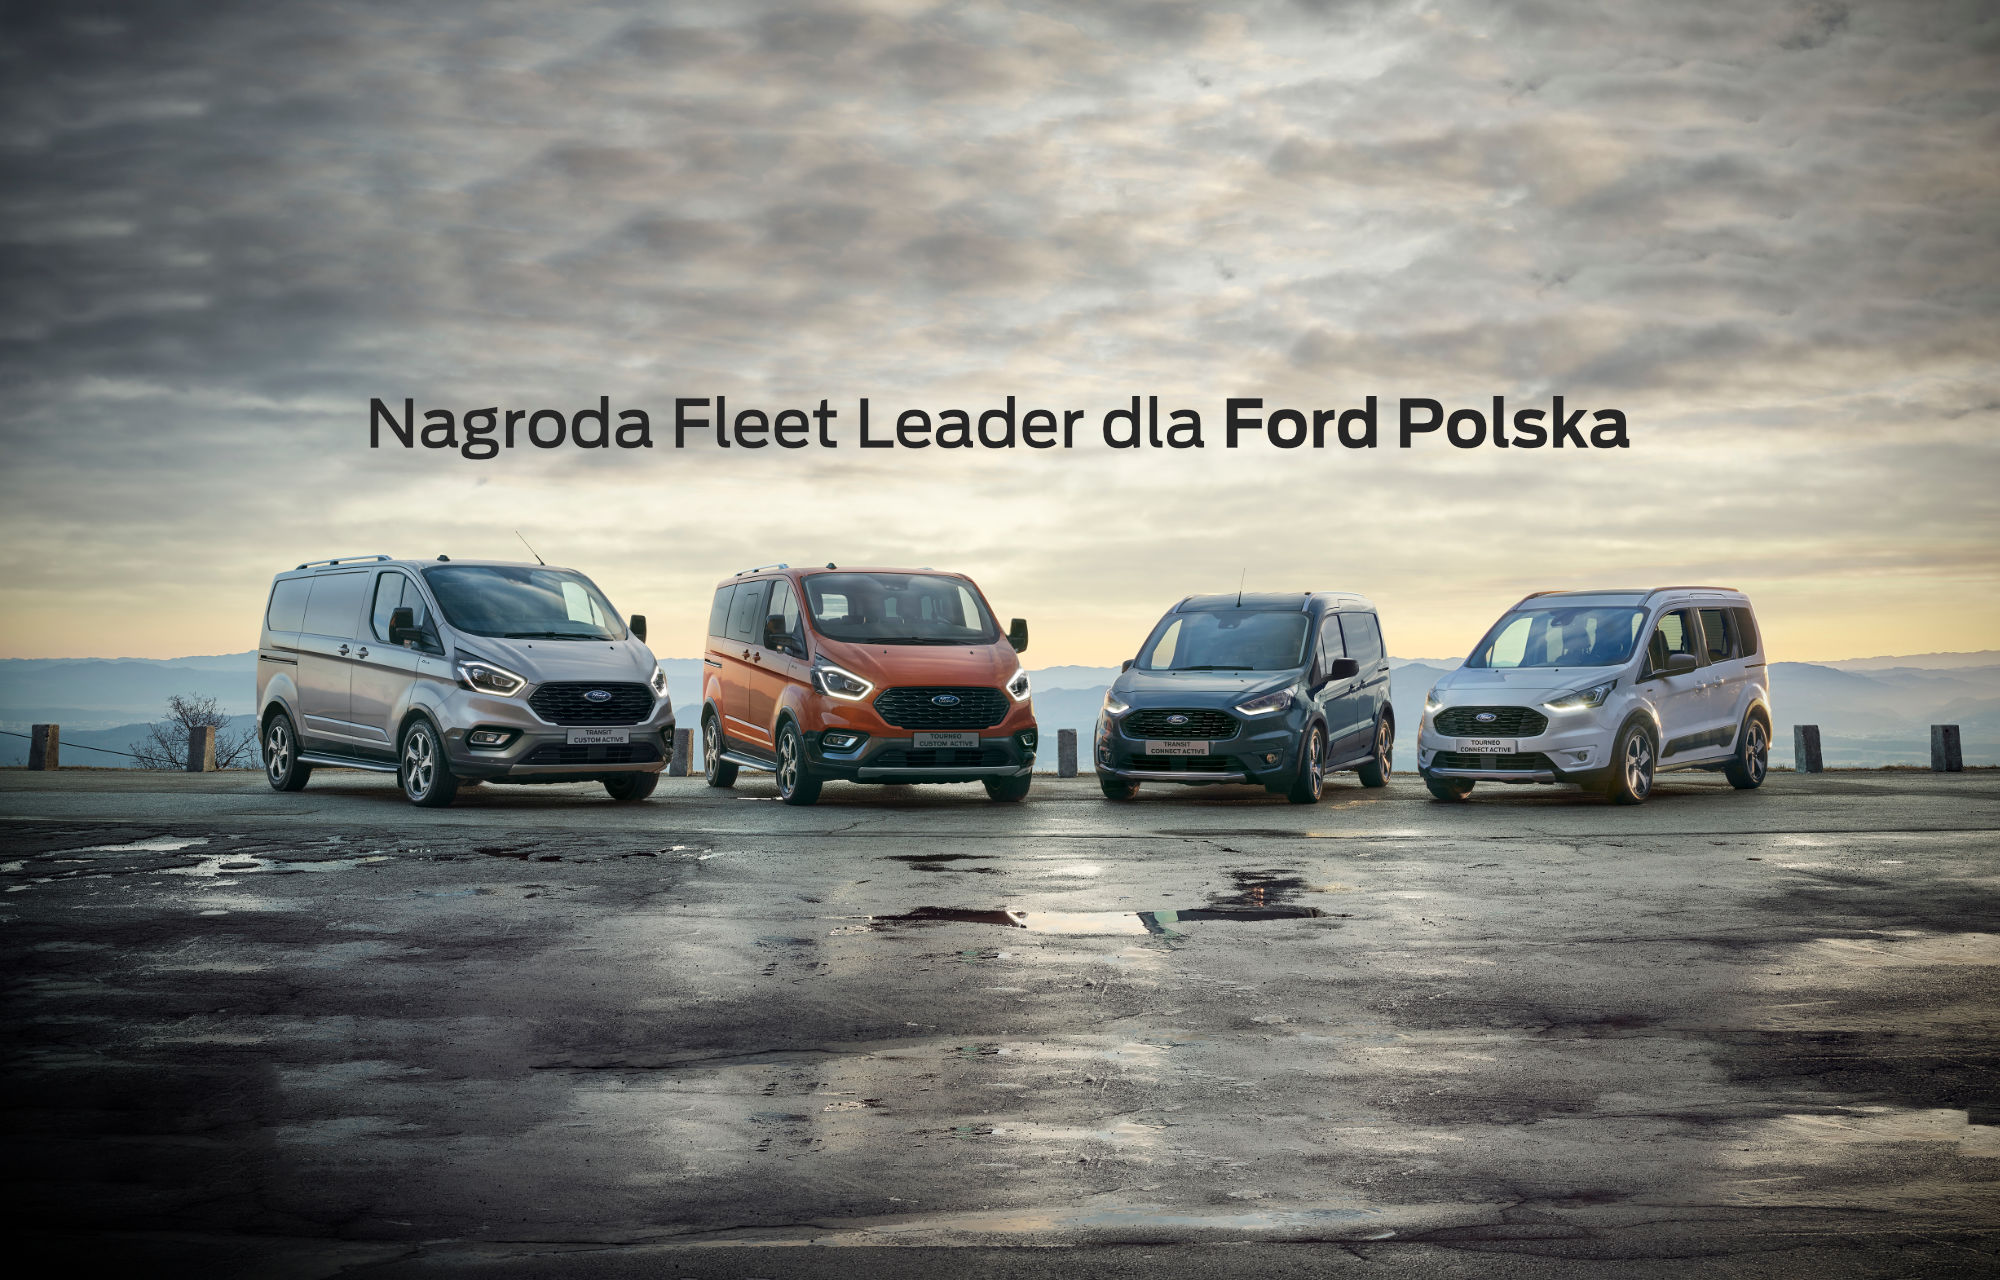 Nagroda Fleet Leader dla Ford Polska za kompleksową